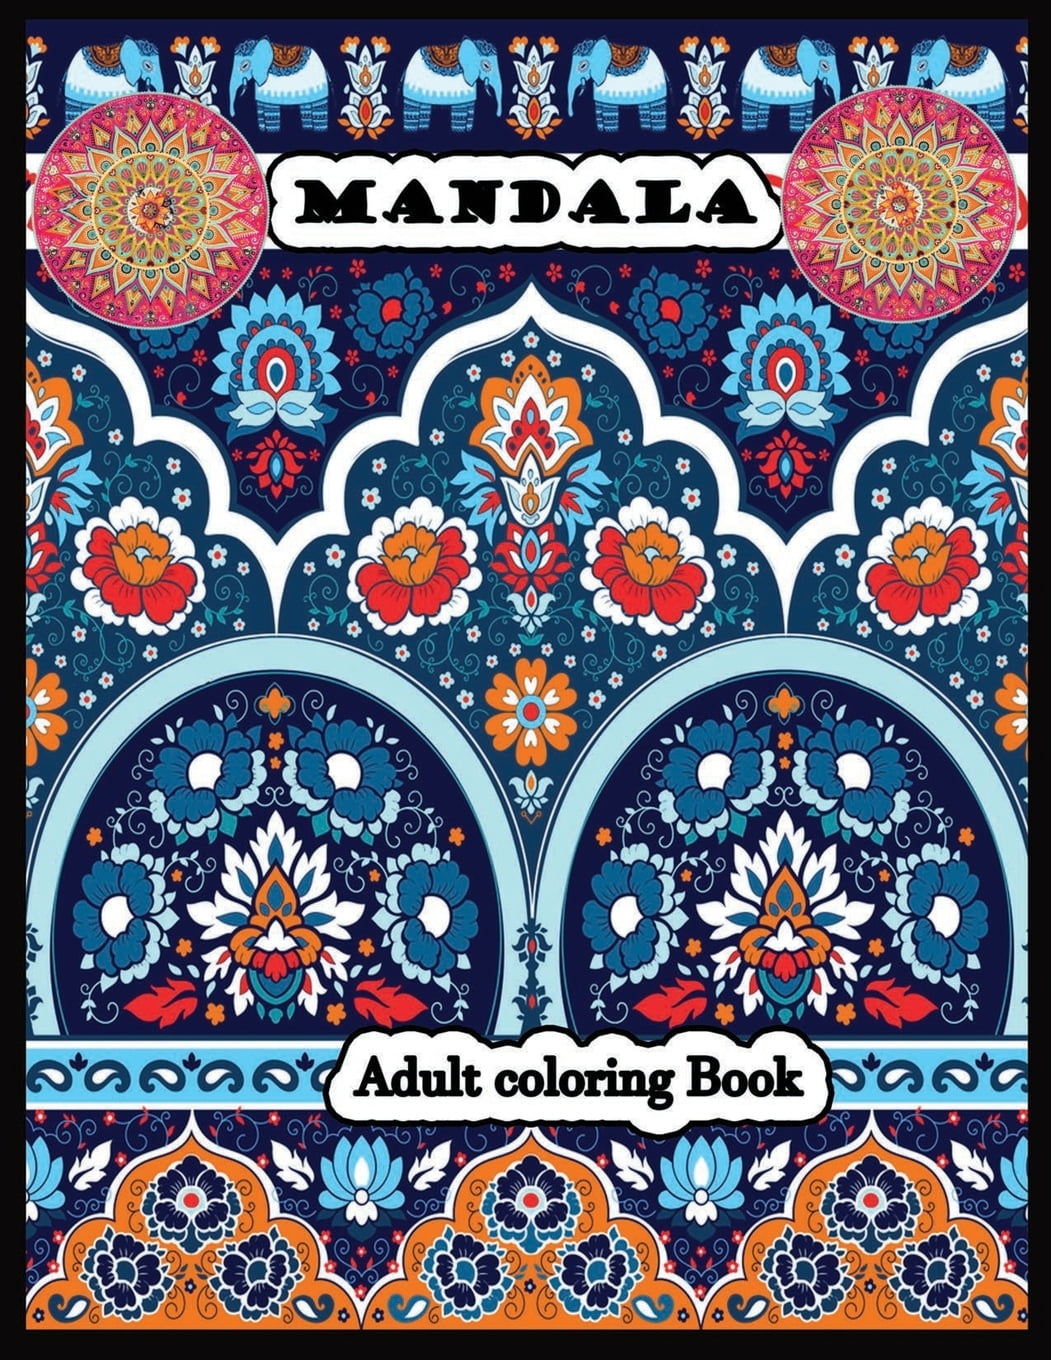 Download Mandala Adult Coloring Book (Paperback) - Walmart.com ...